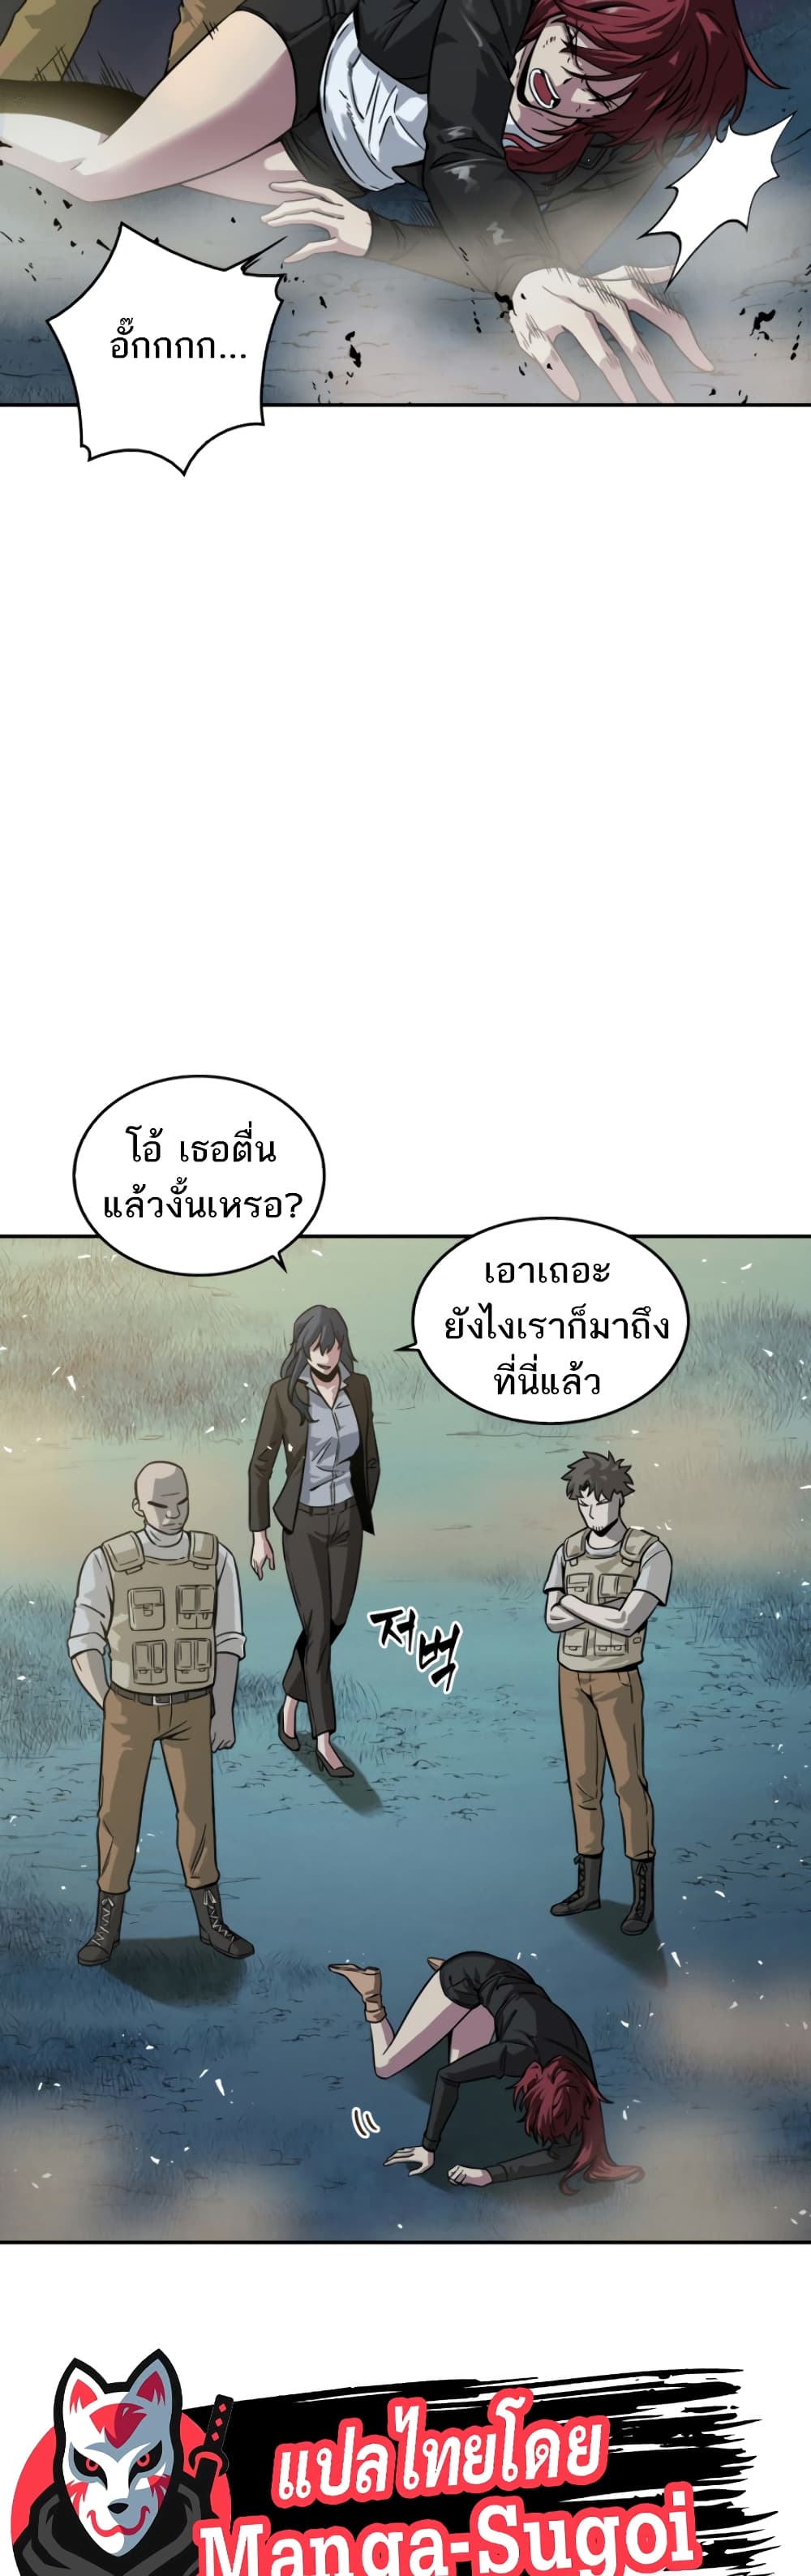 Tomb Raider King 111 แปลไทย